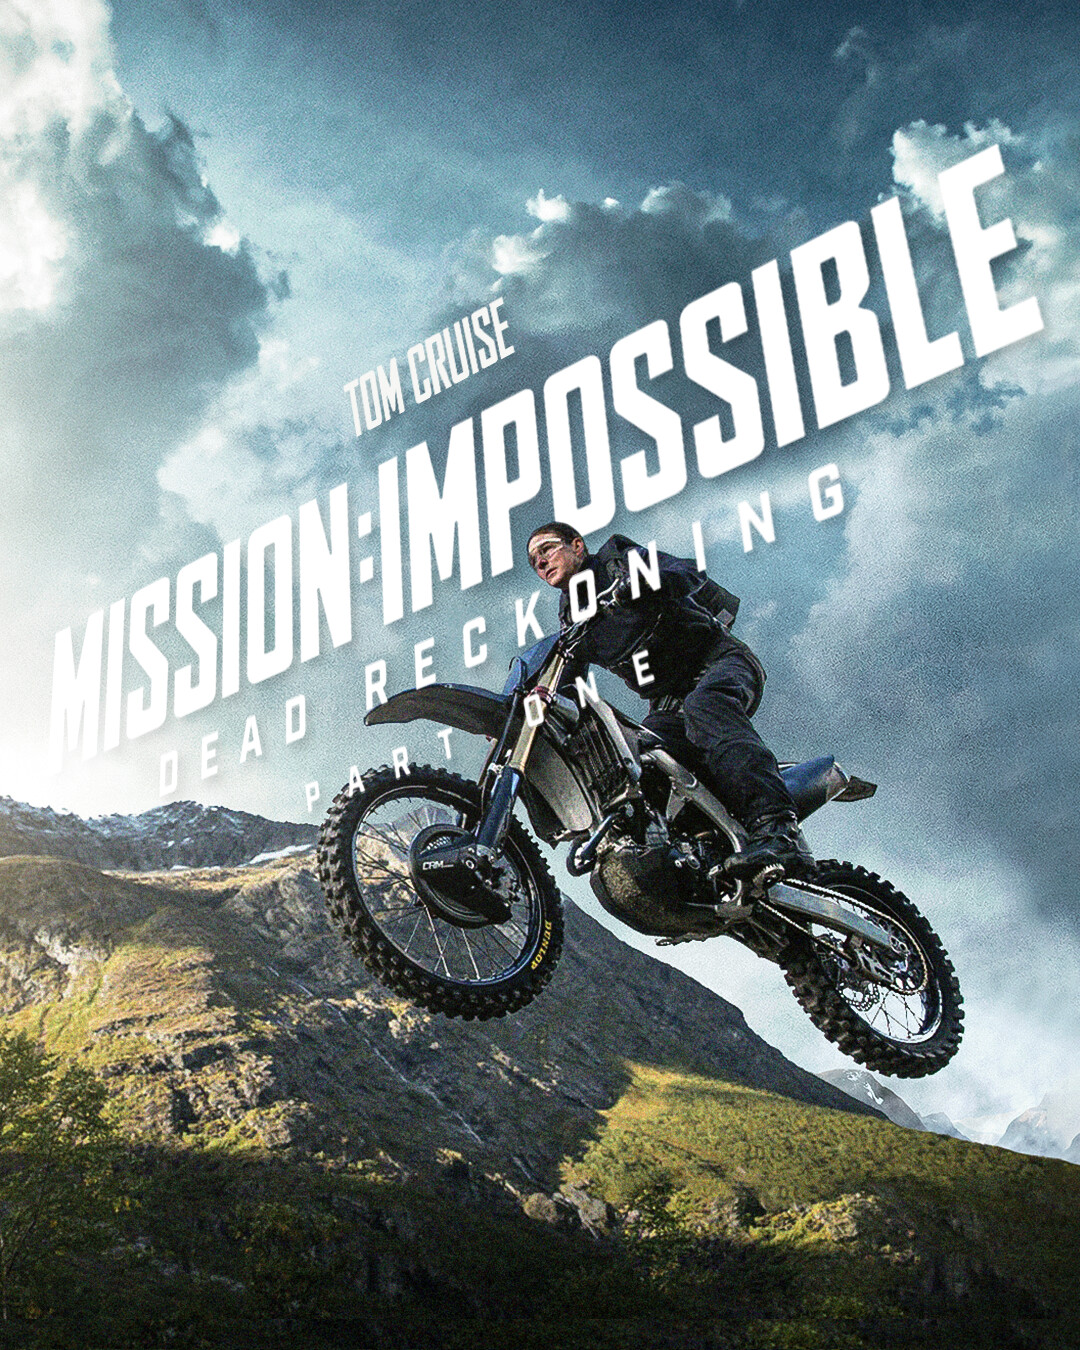 ArtStation - Mission Impossible dead reckoning part 2 poster